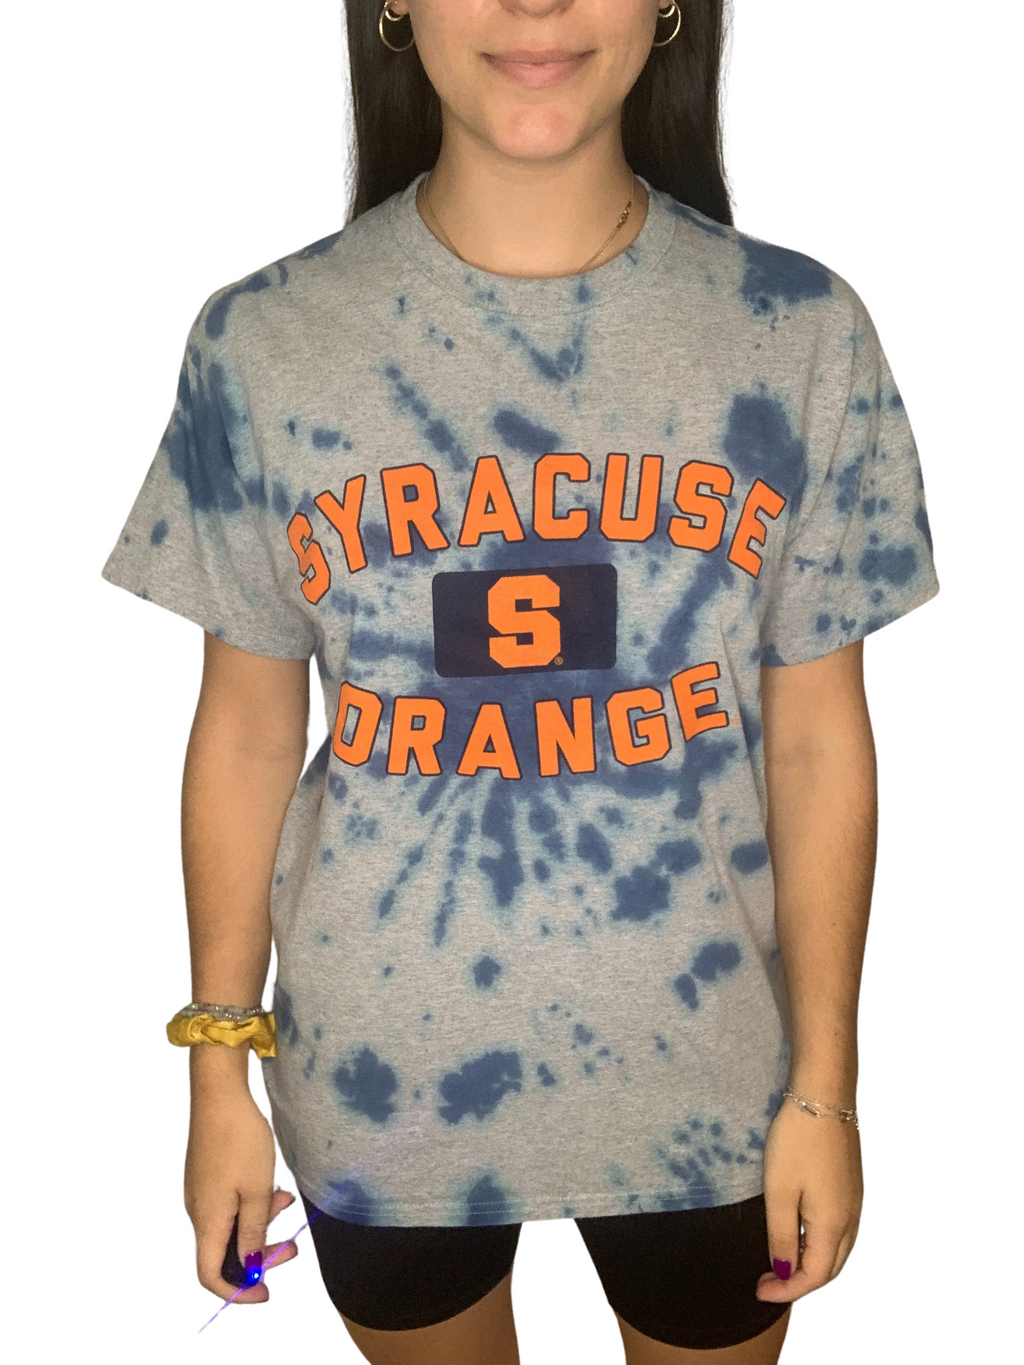 Syracuse University Tie Dye Shirt